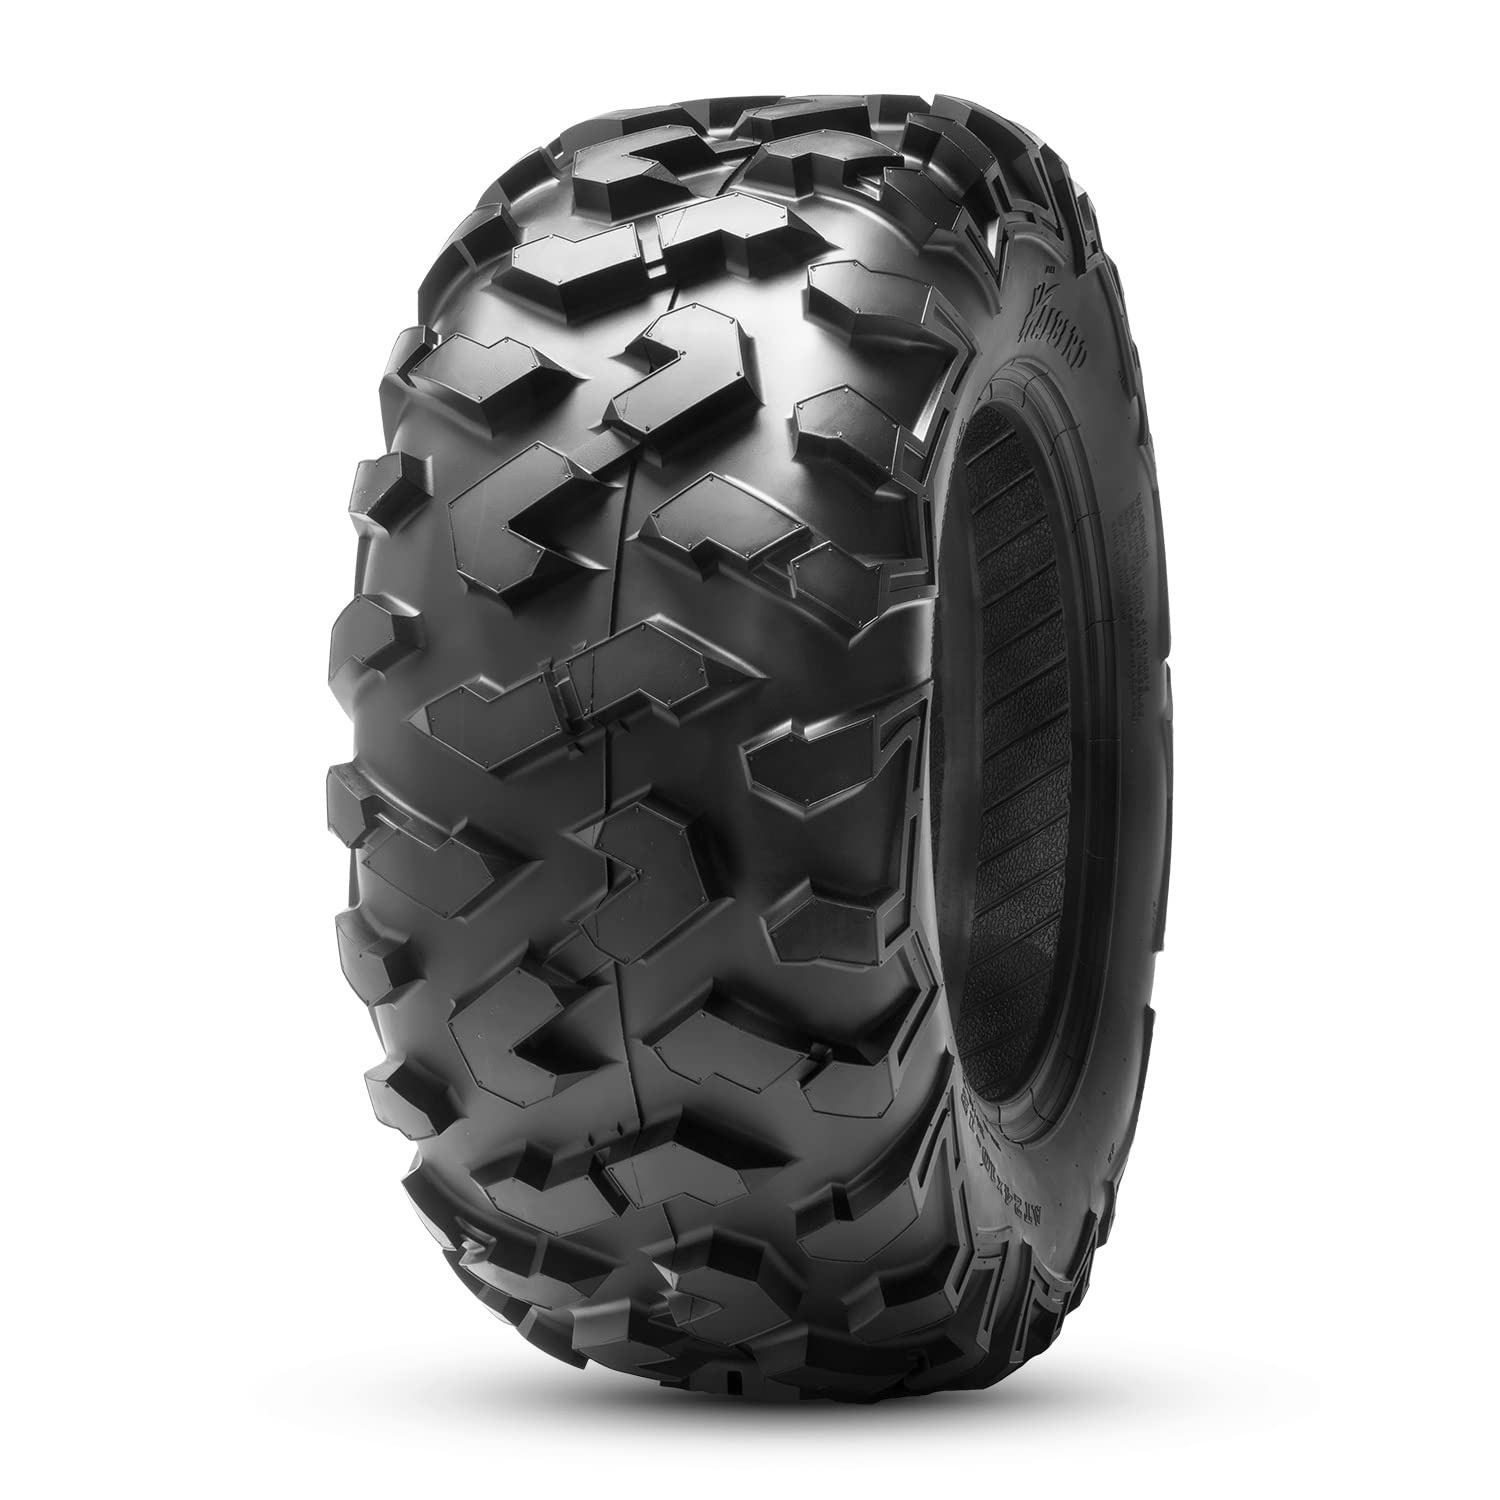 Halberd HU01 30x10R14 Radial ATV Tires